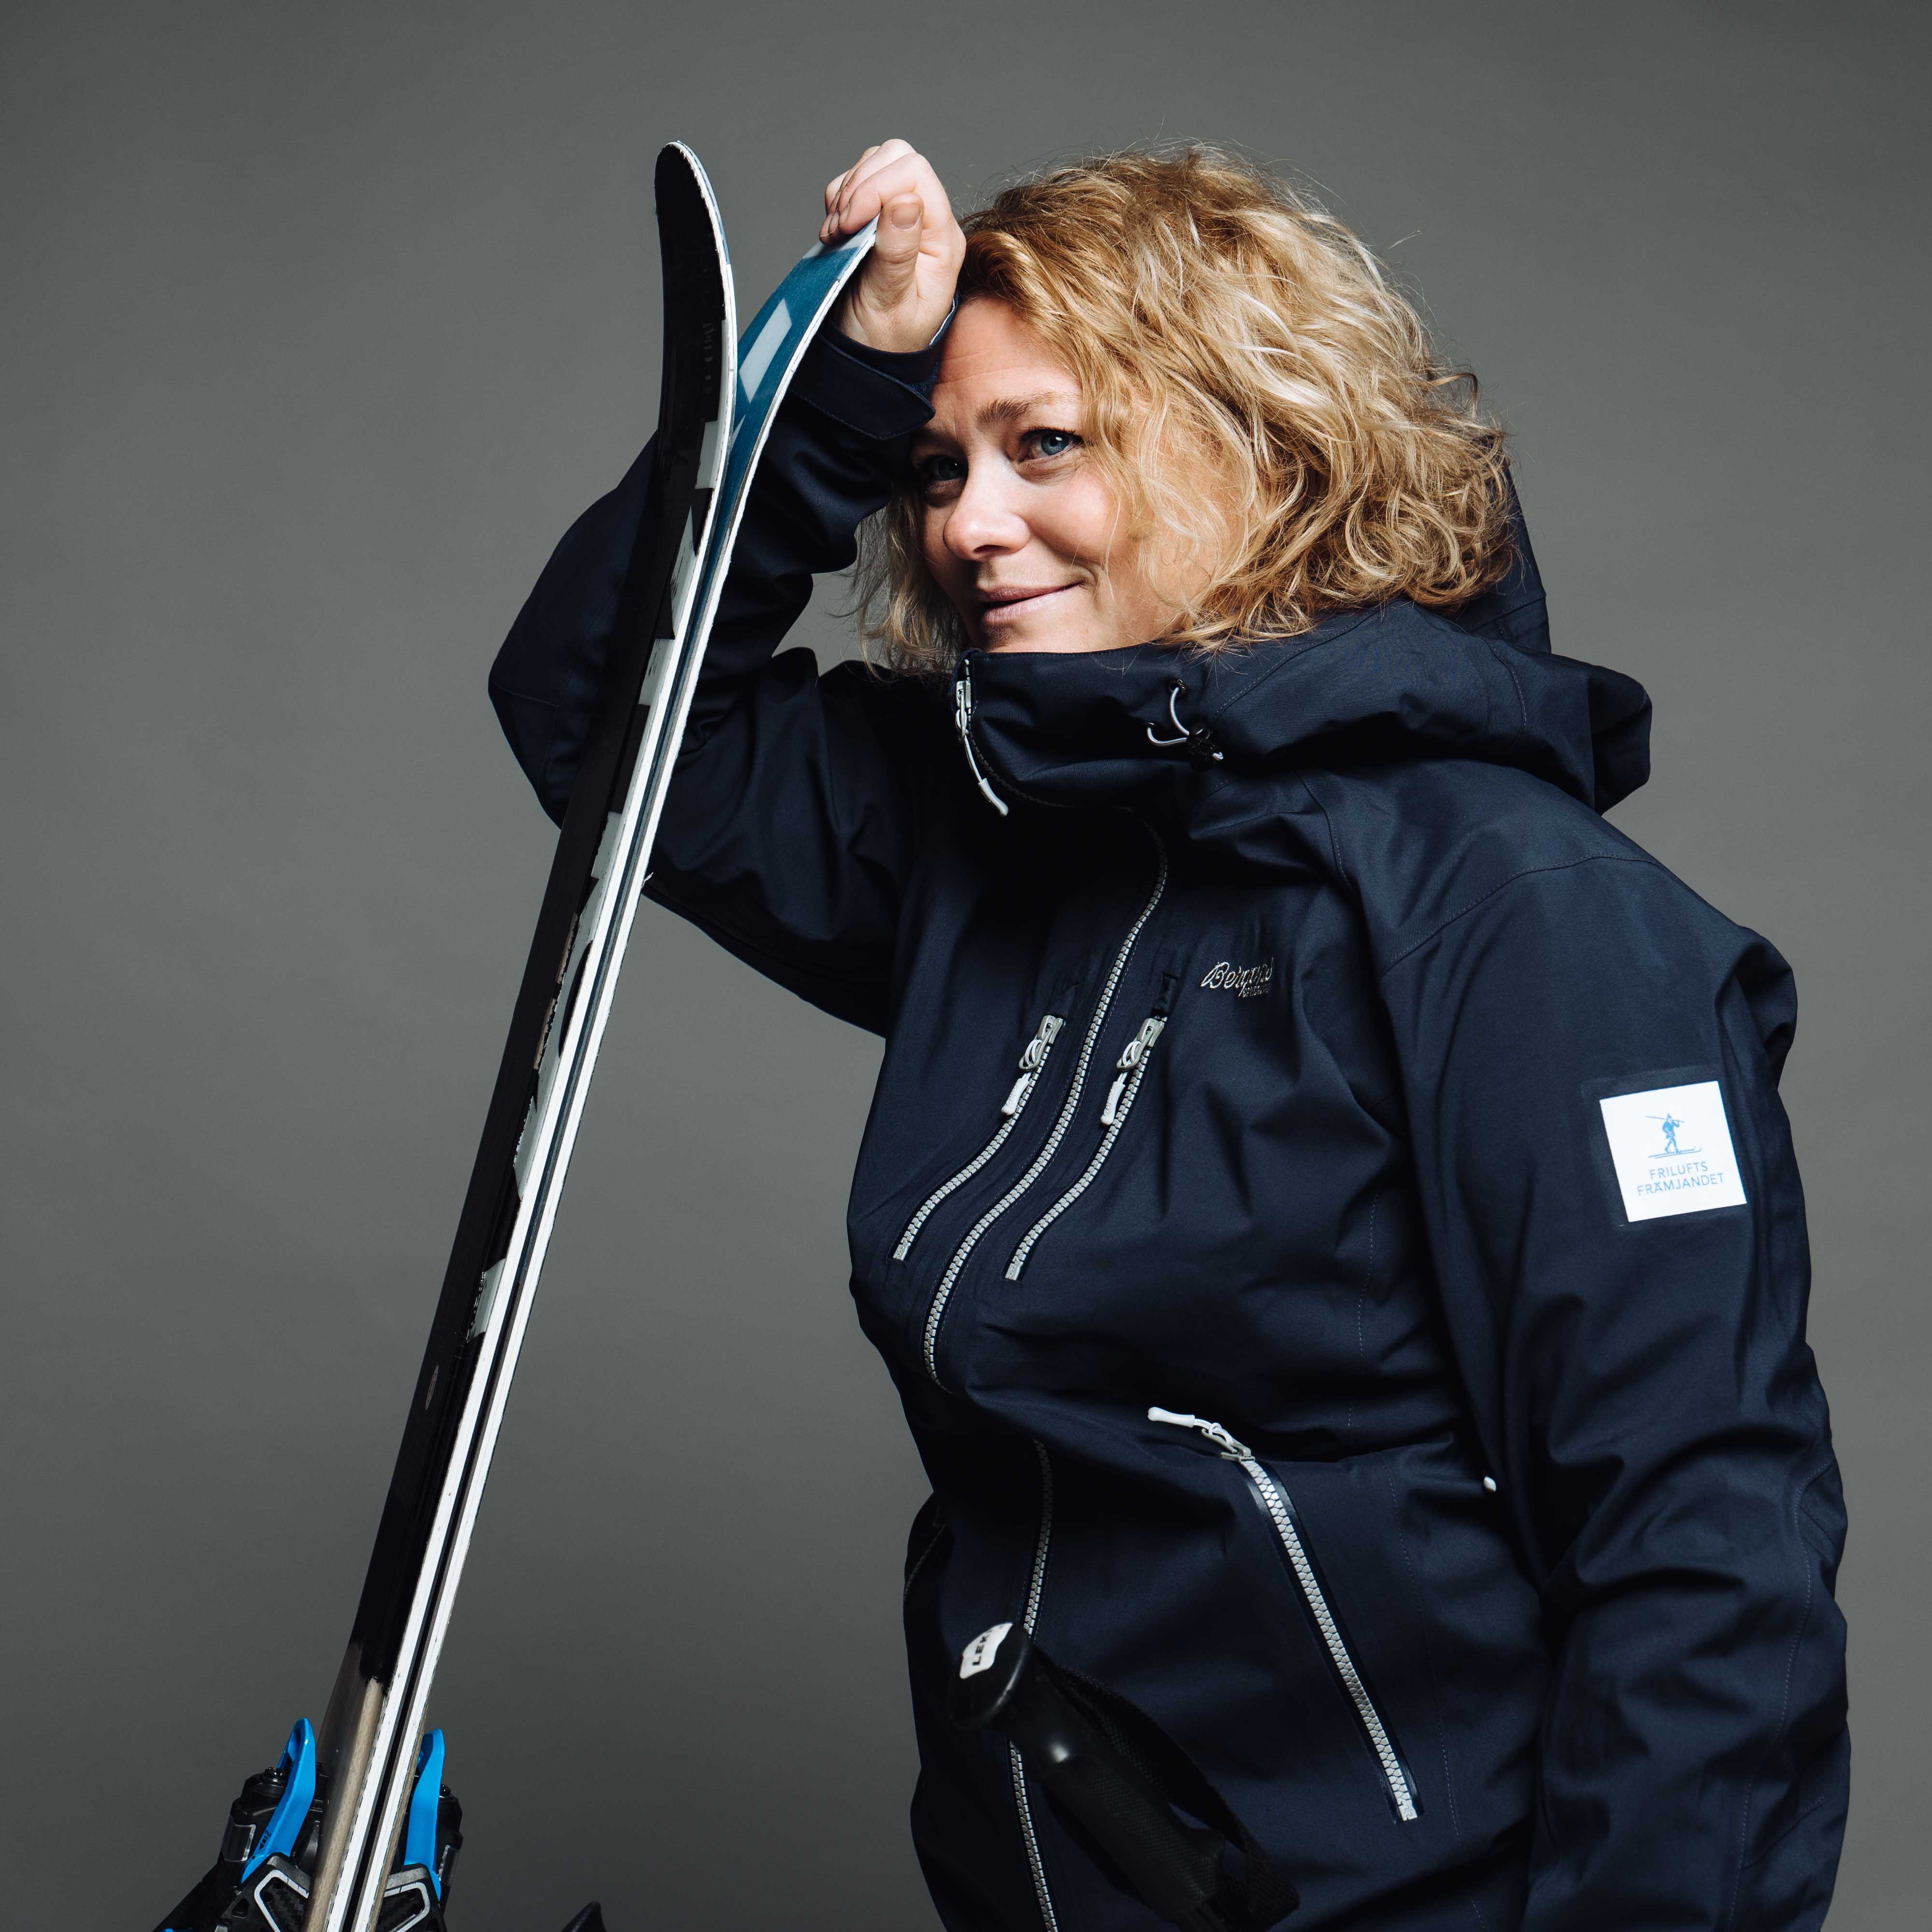 Sofia, Ledare i skidåkning